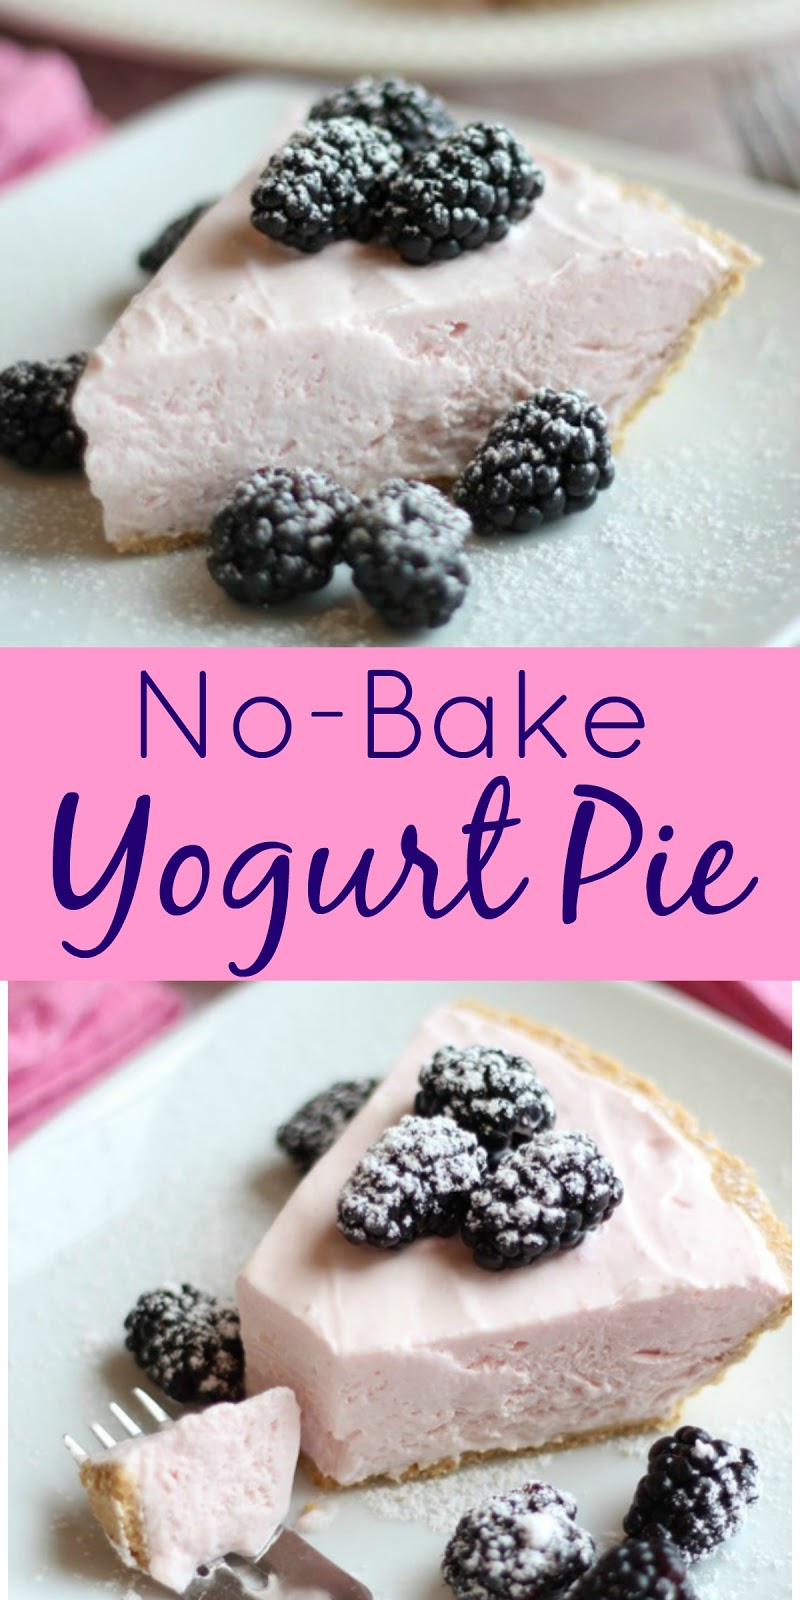 Eat Cake For Dinner: Aunt Patrecia's Yogurt Pie - No Bake